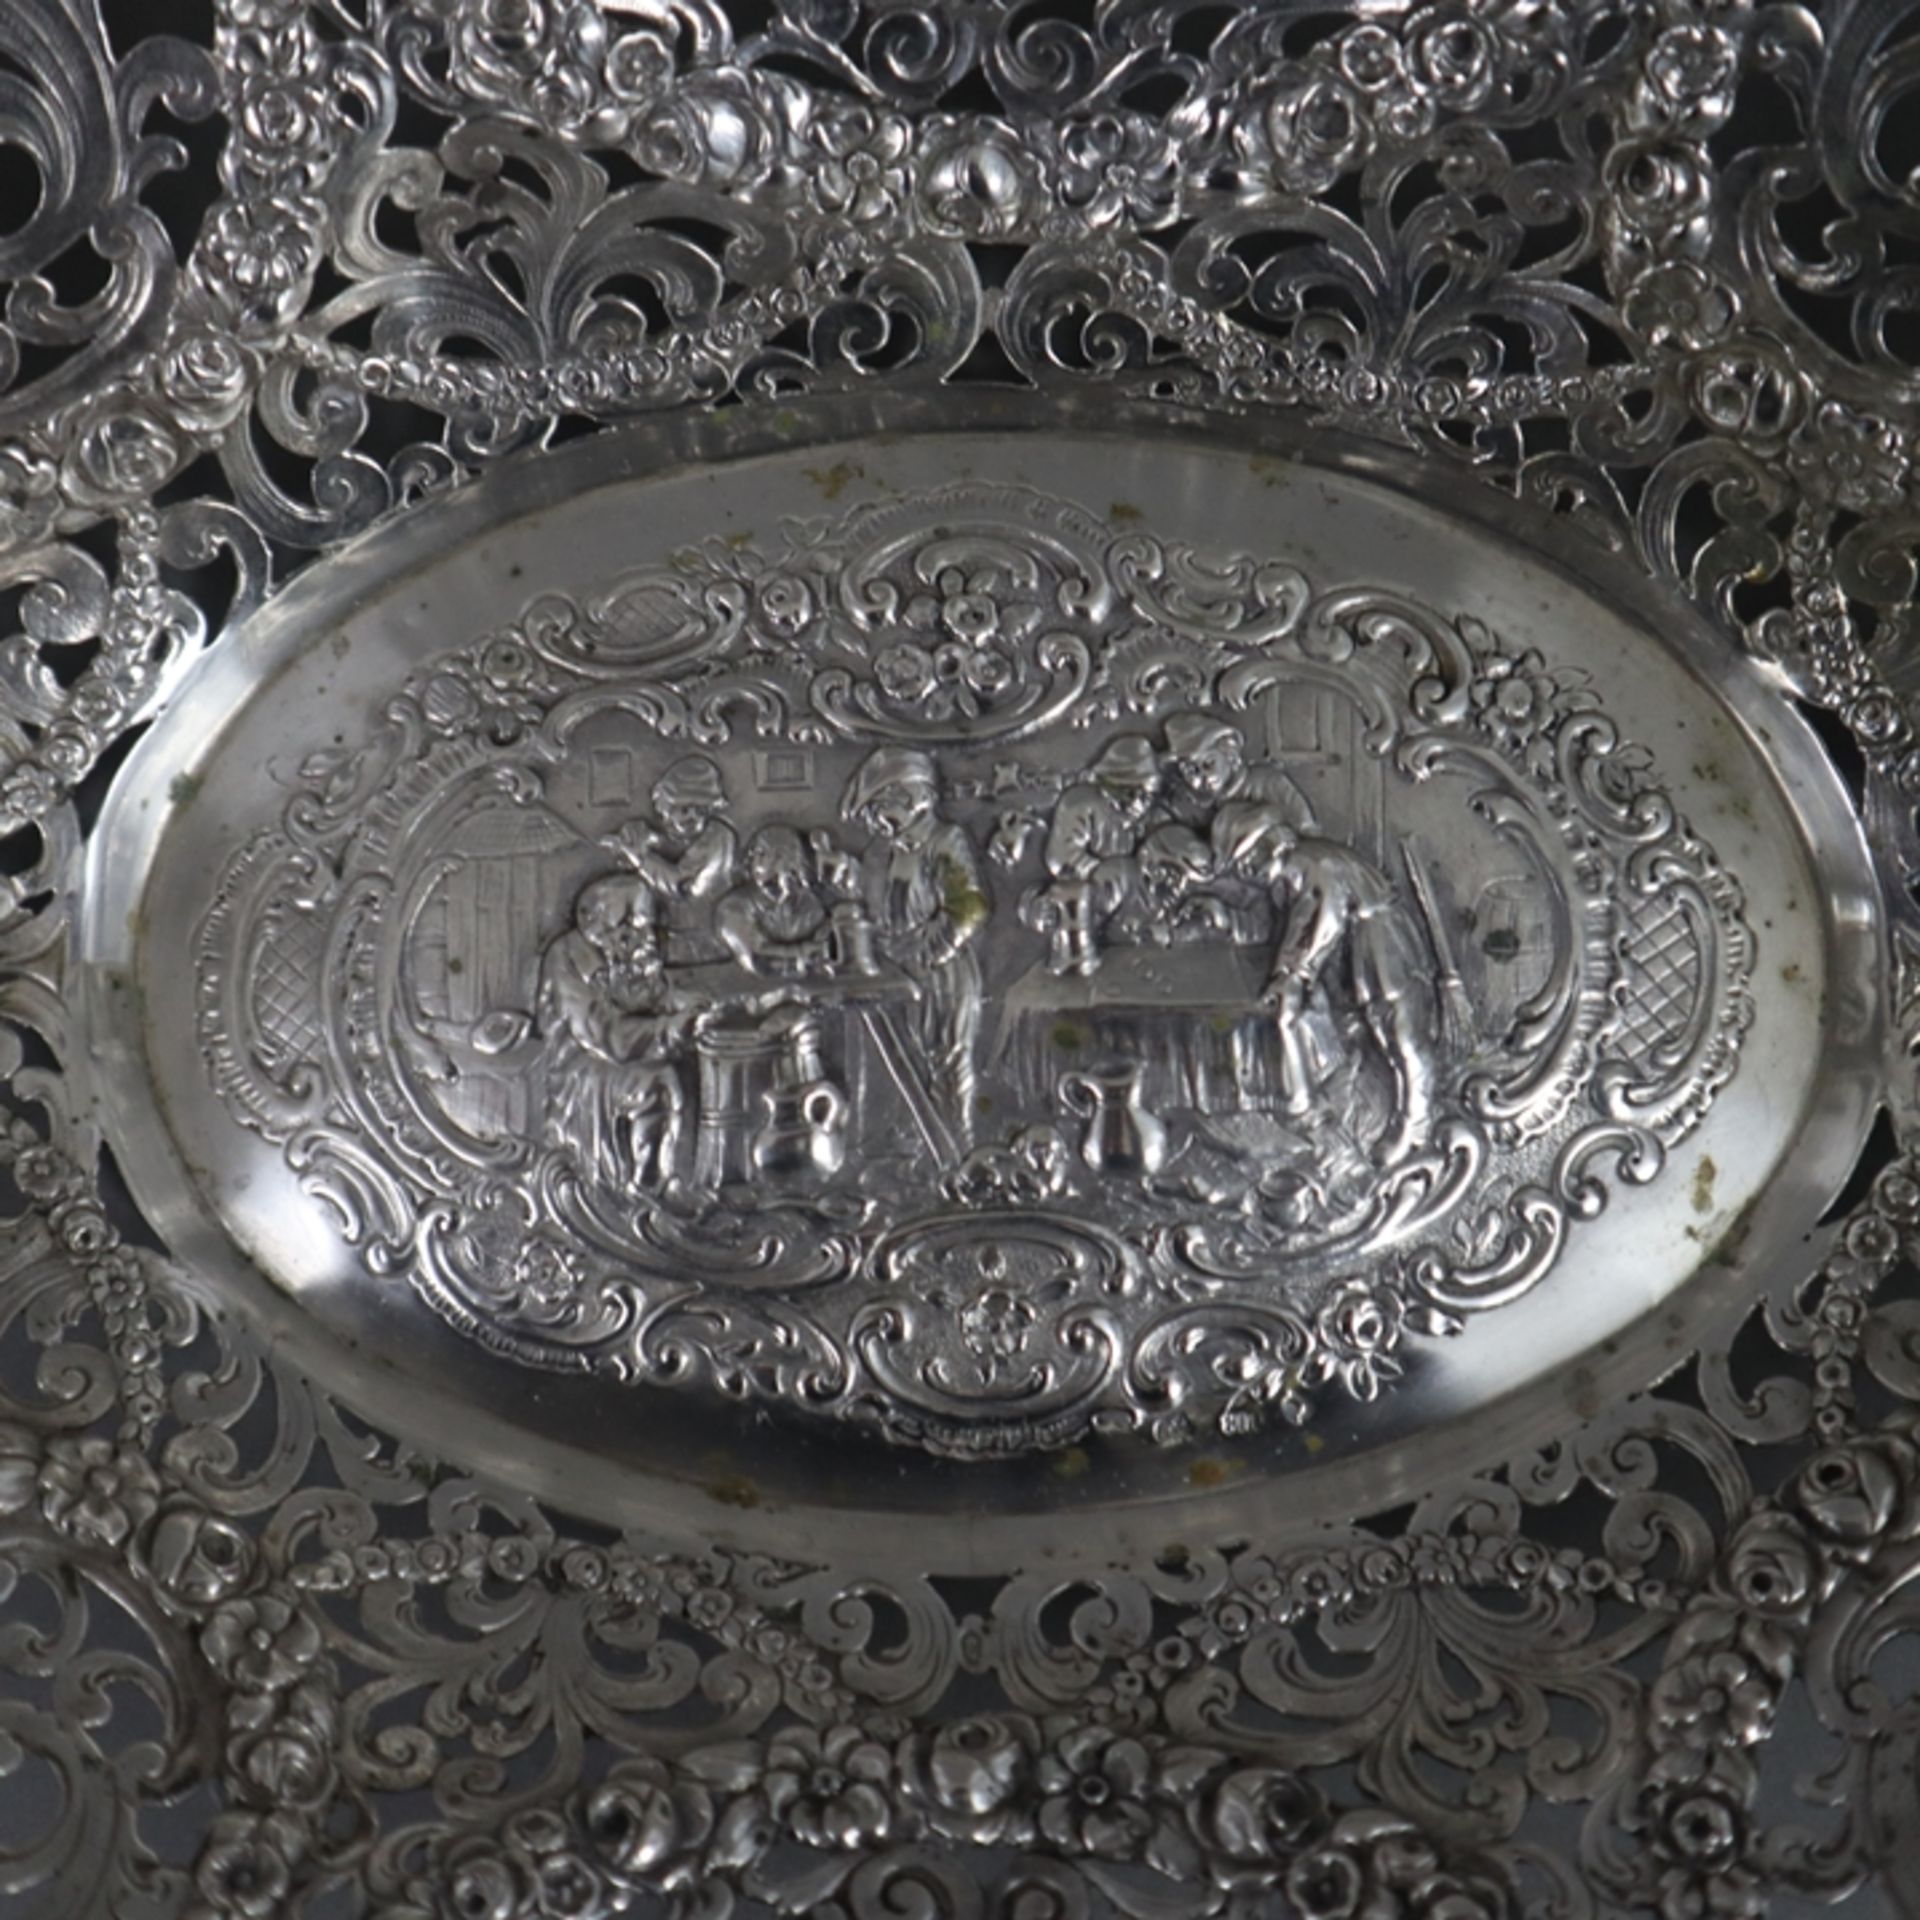 Üppig dekorierte Korbschale - deutsch, Silber 800/000, gestempelt, oval, geschweifte filigran durch - Bild 2 aus 10